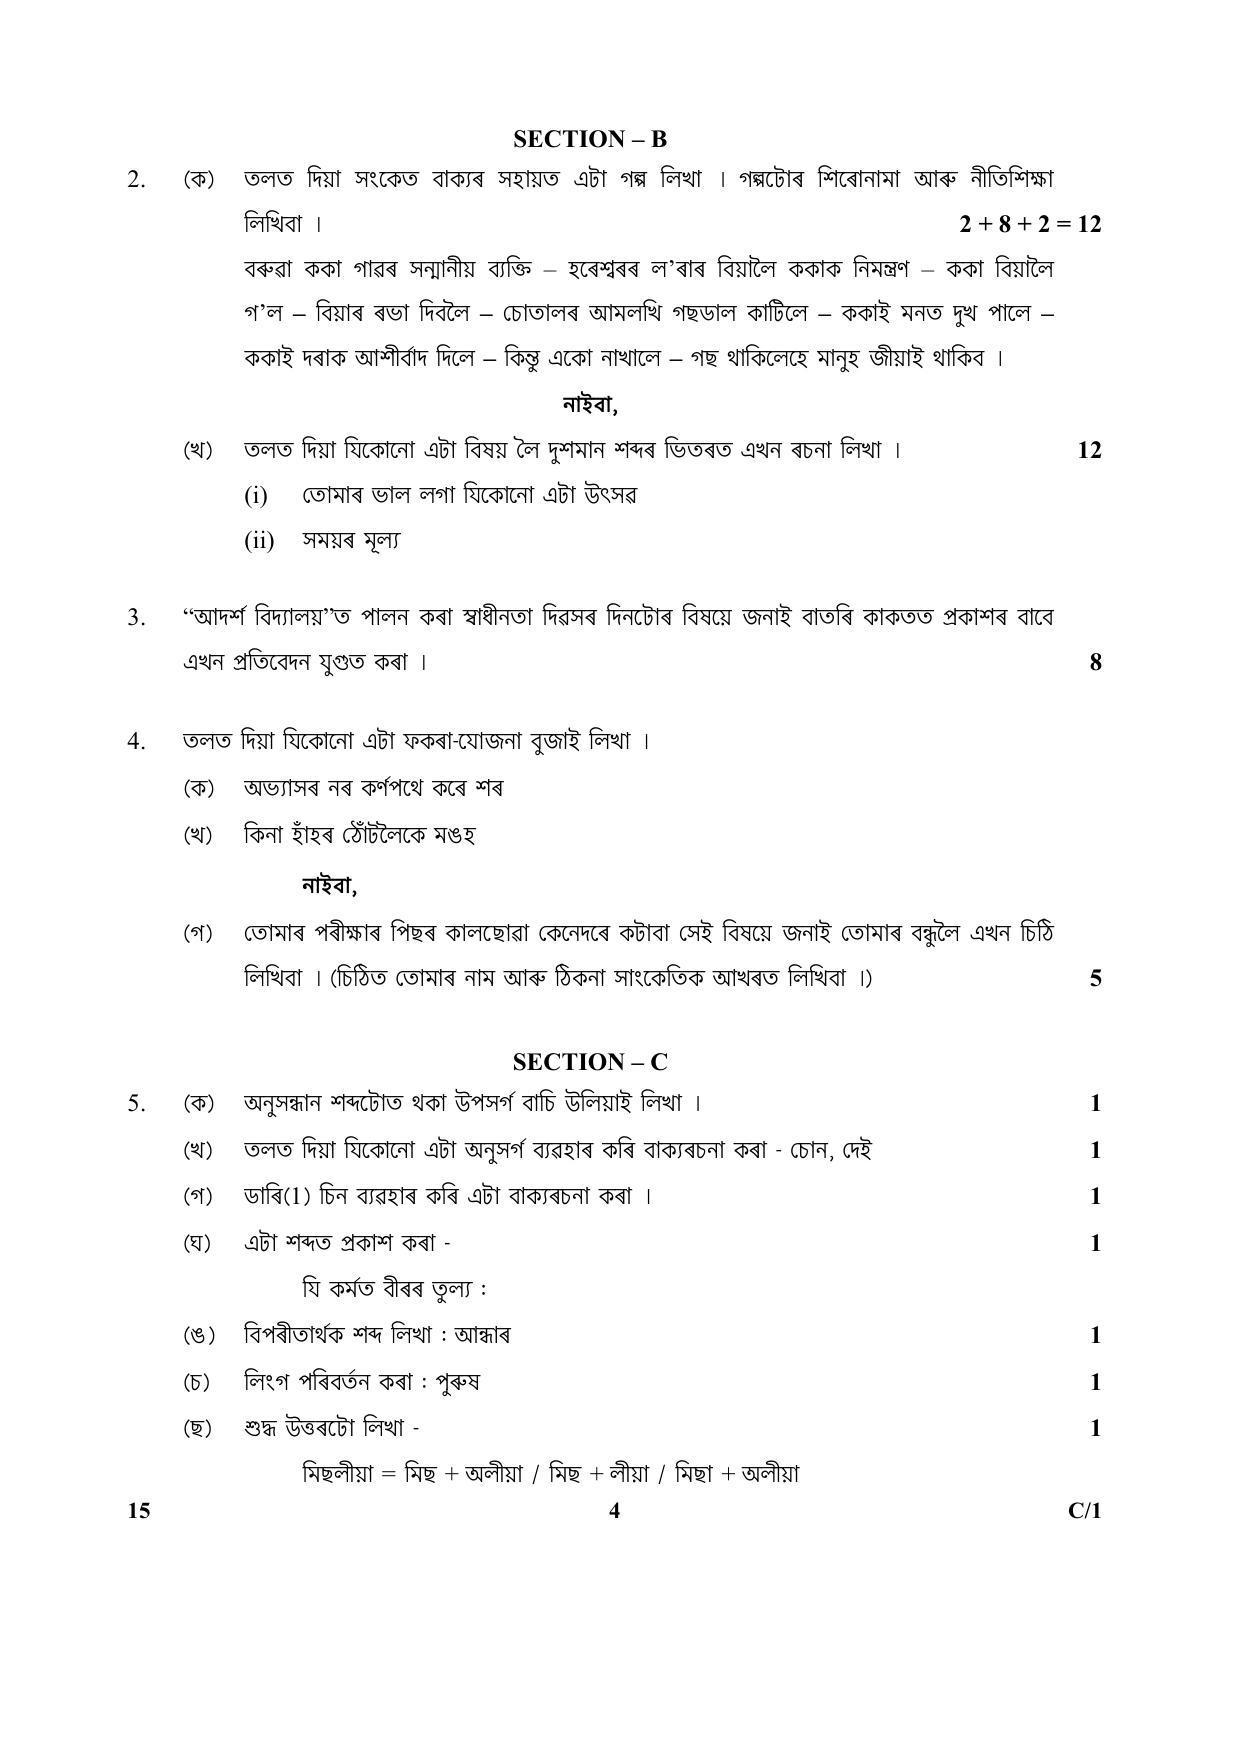 CBSE Class 10 15 (Assamese) 2018 Compartment Question Paper - Page 4